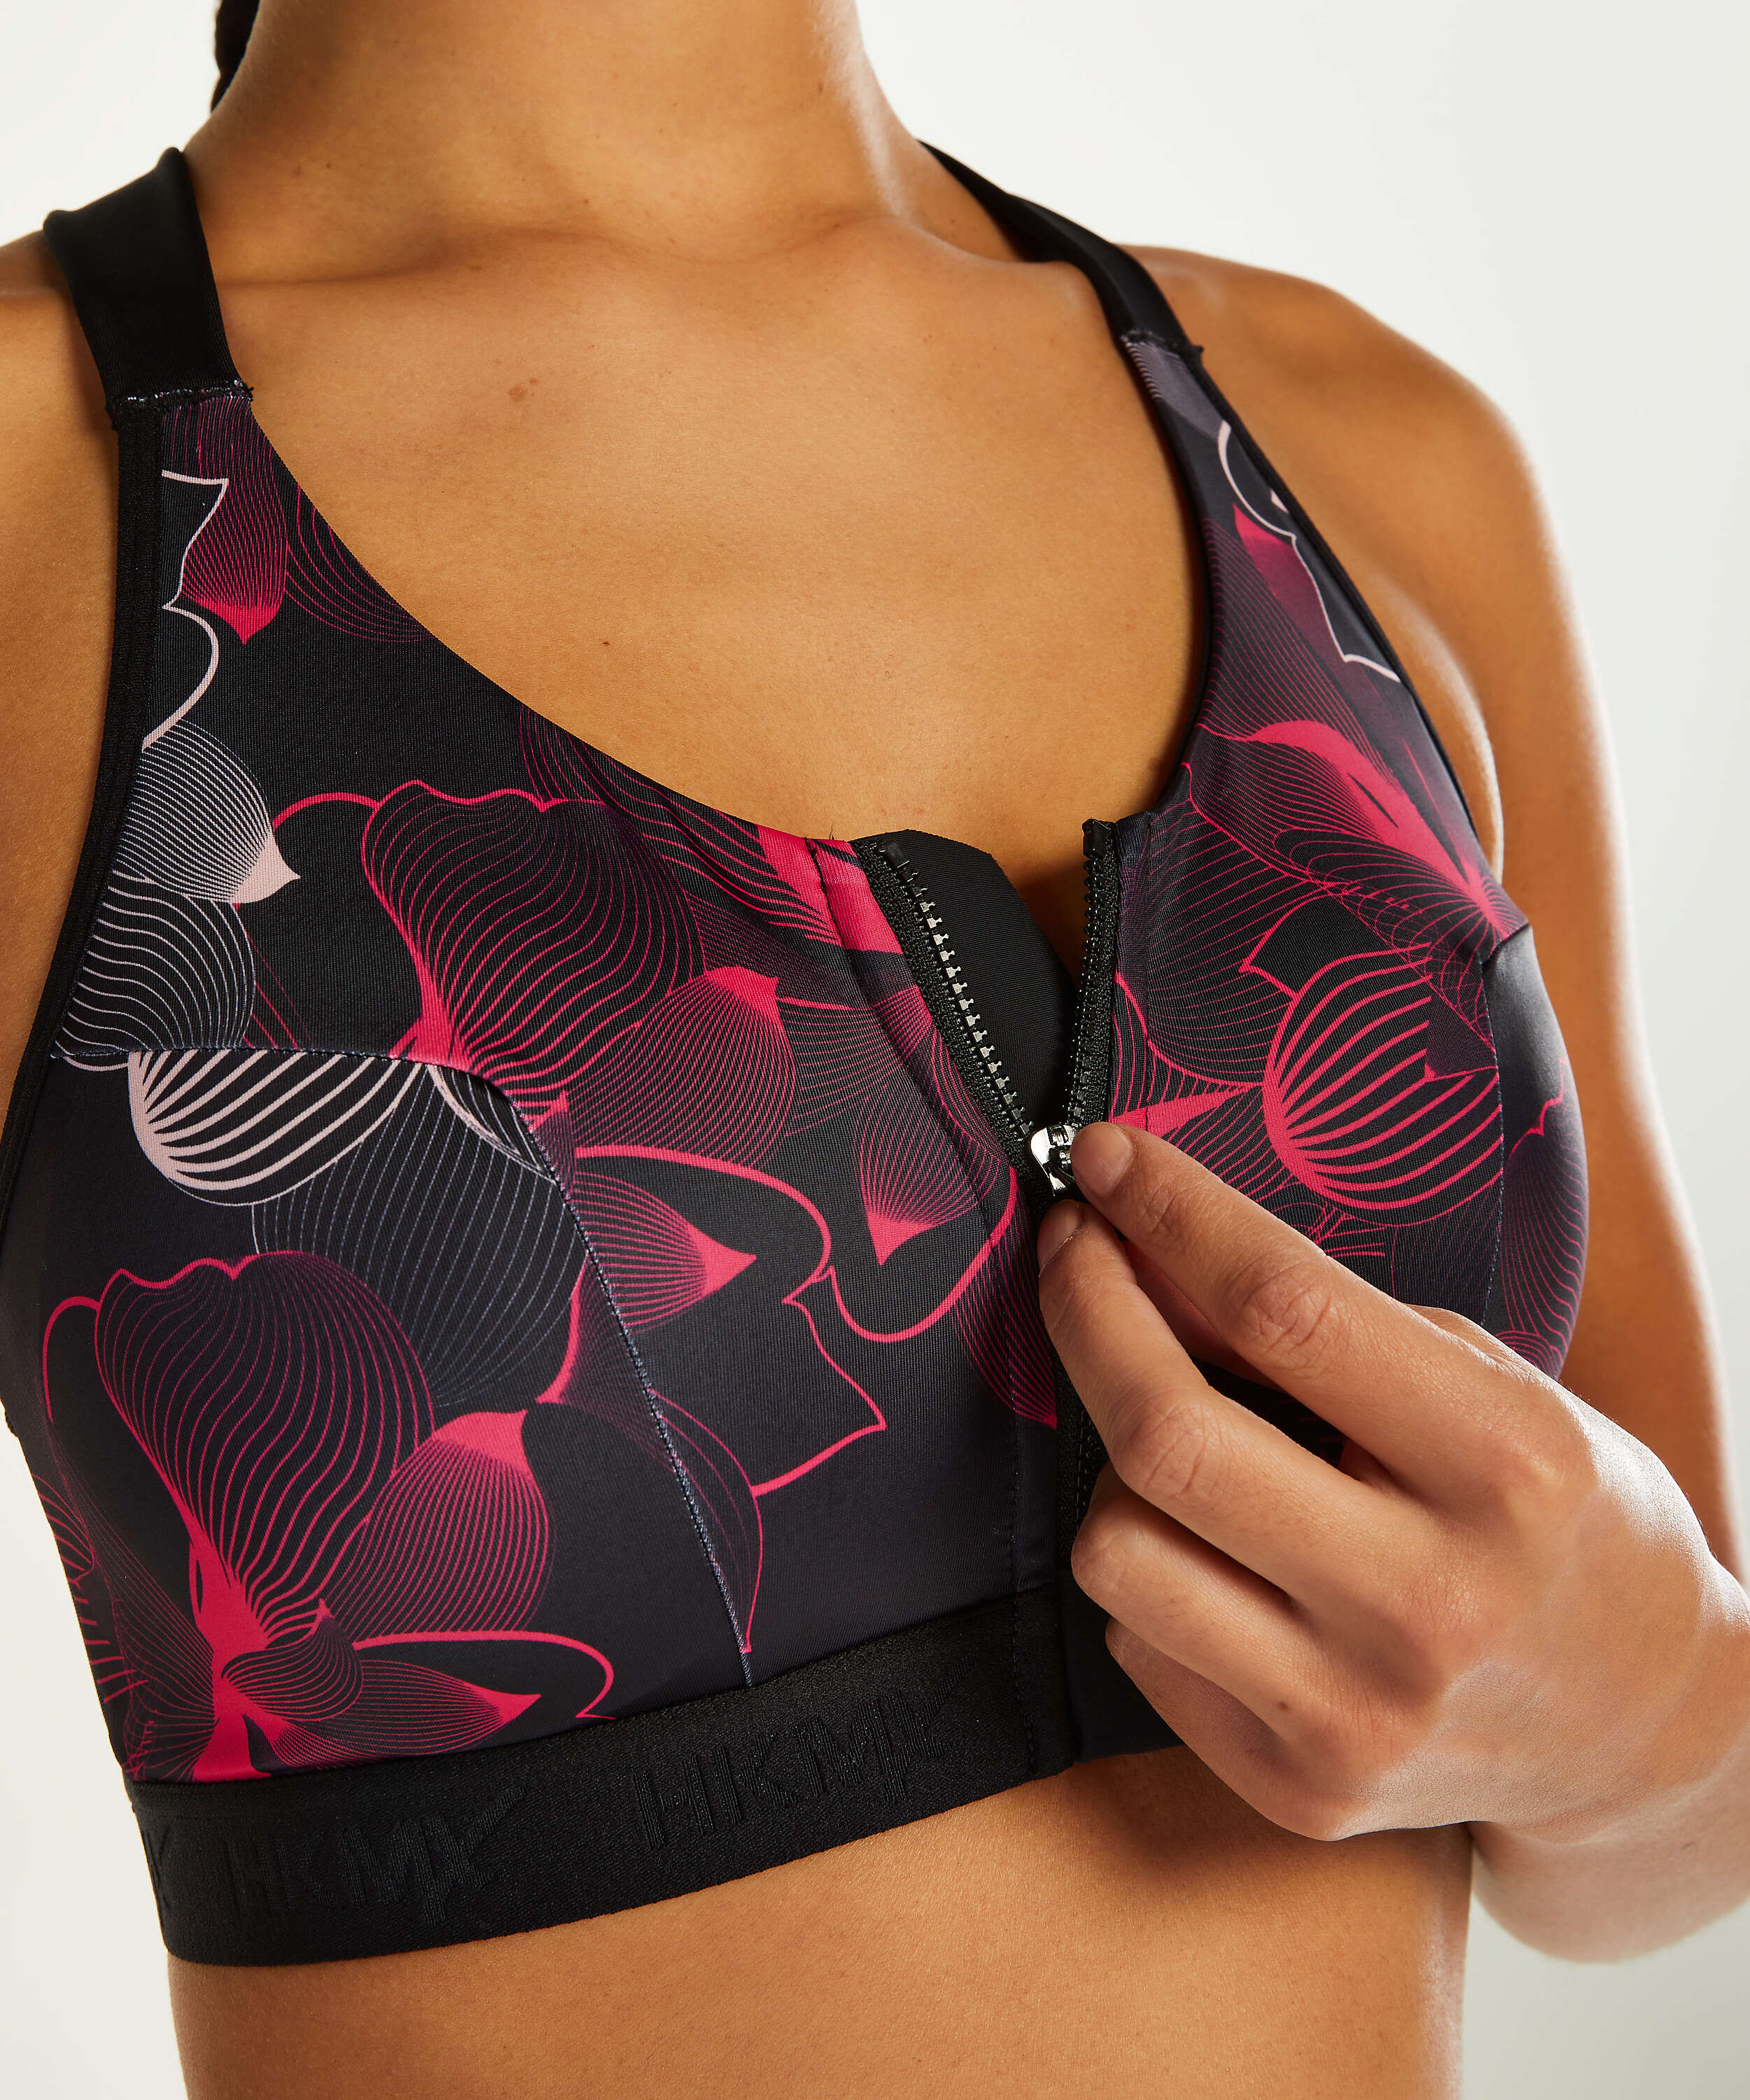 HKMX Sports bra The Pro Level 3, Pink, main